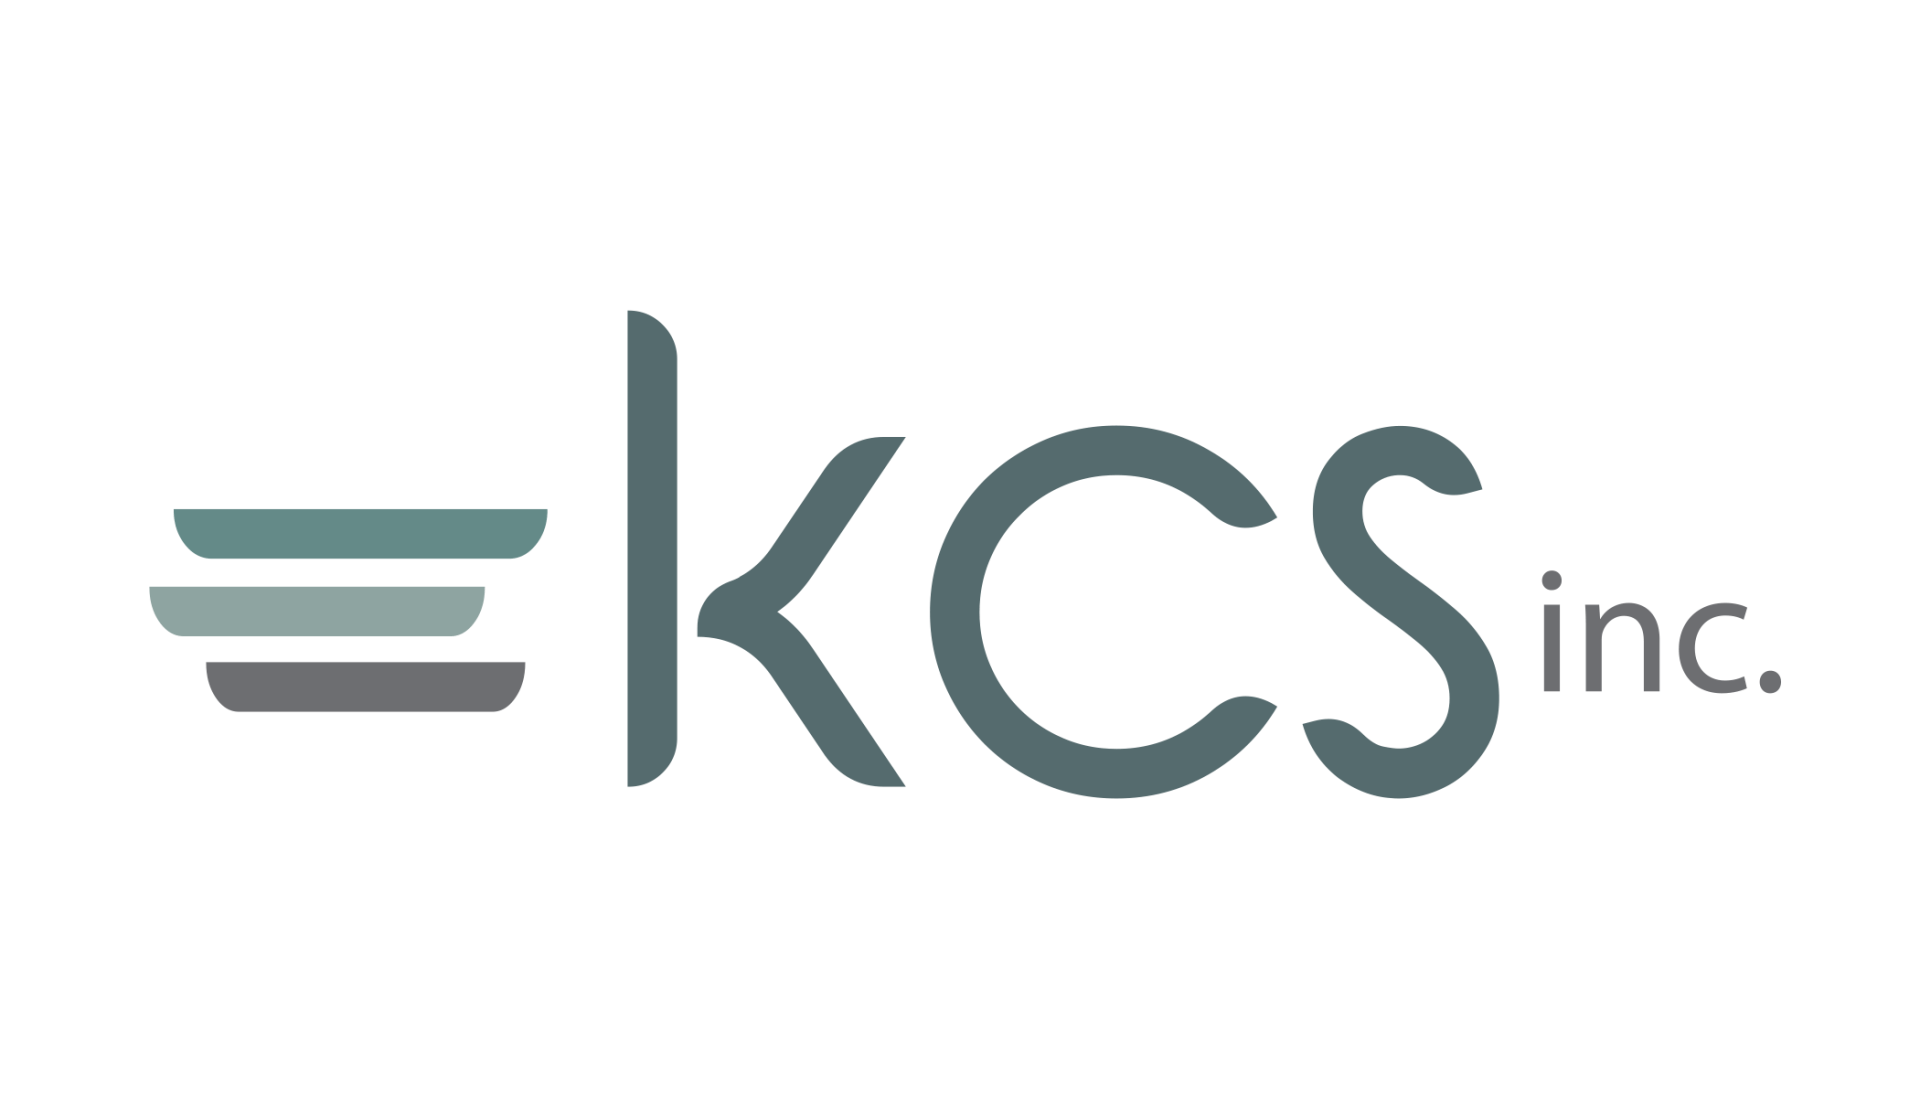 kc logo Template | PosterMyWall